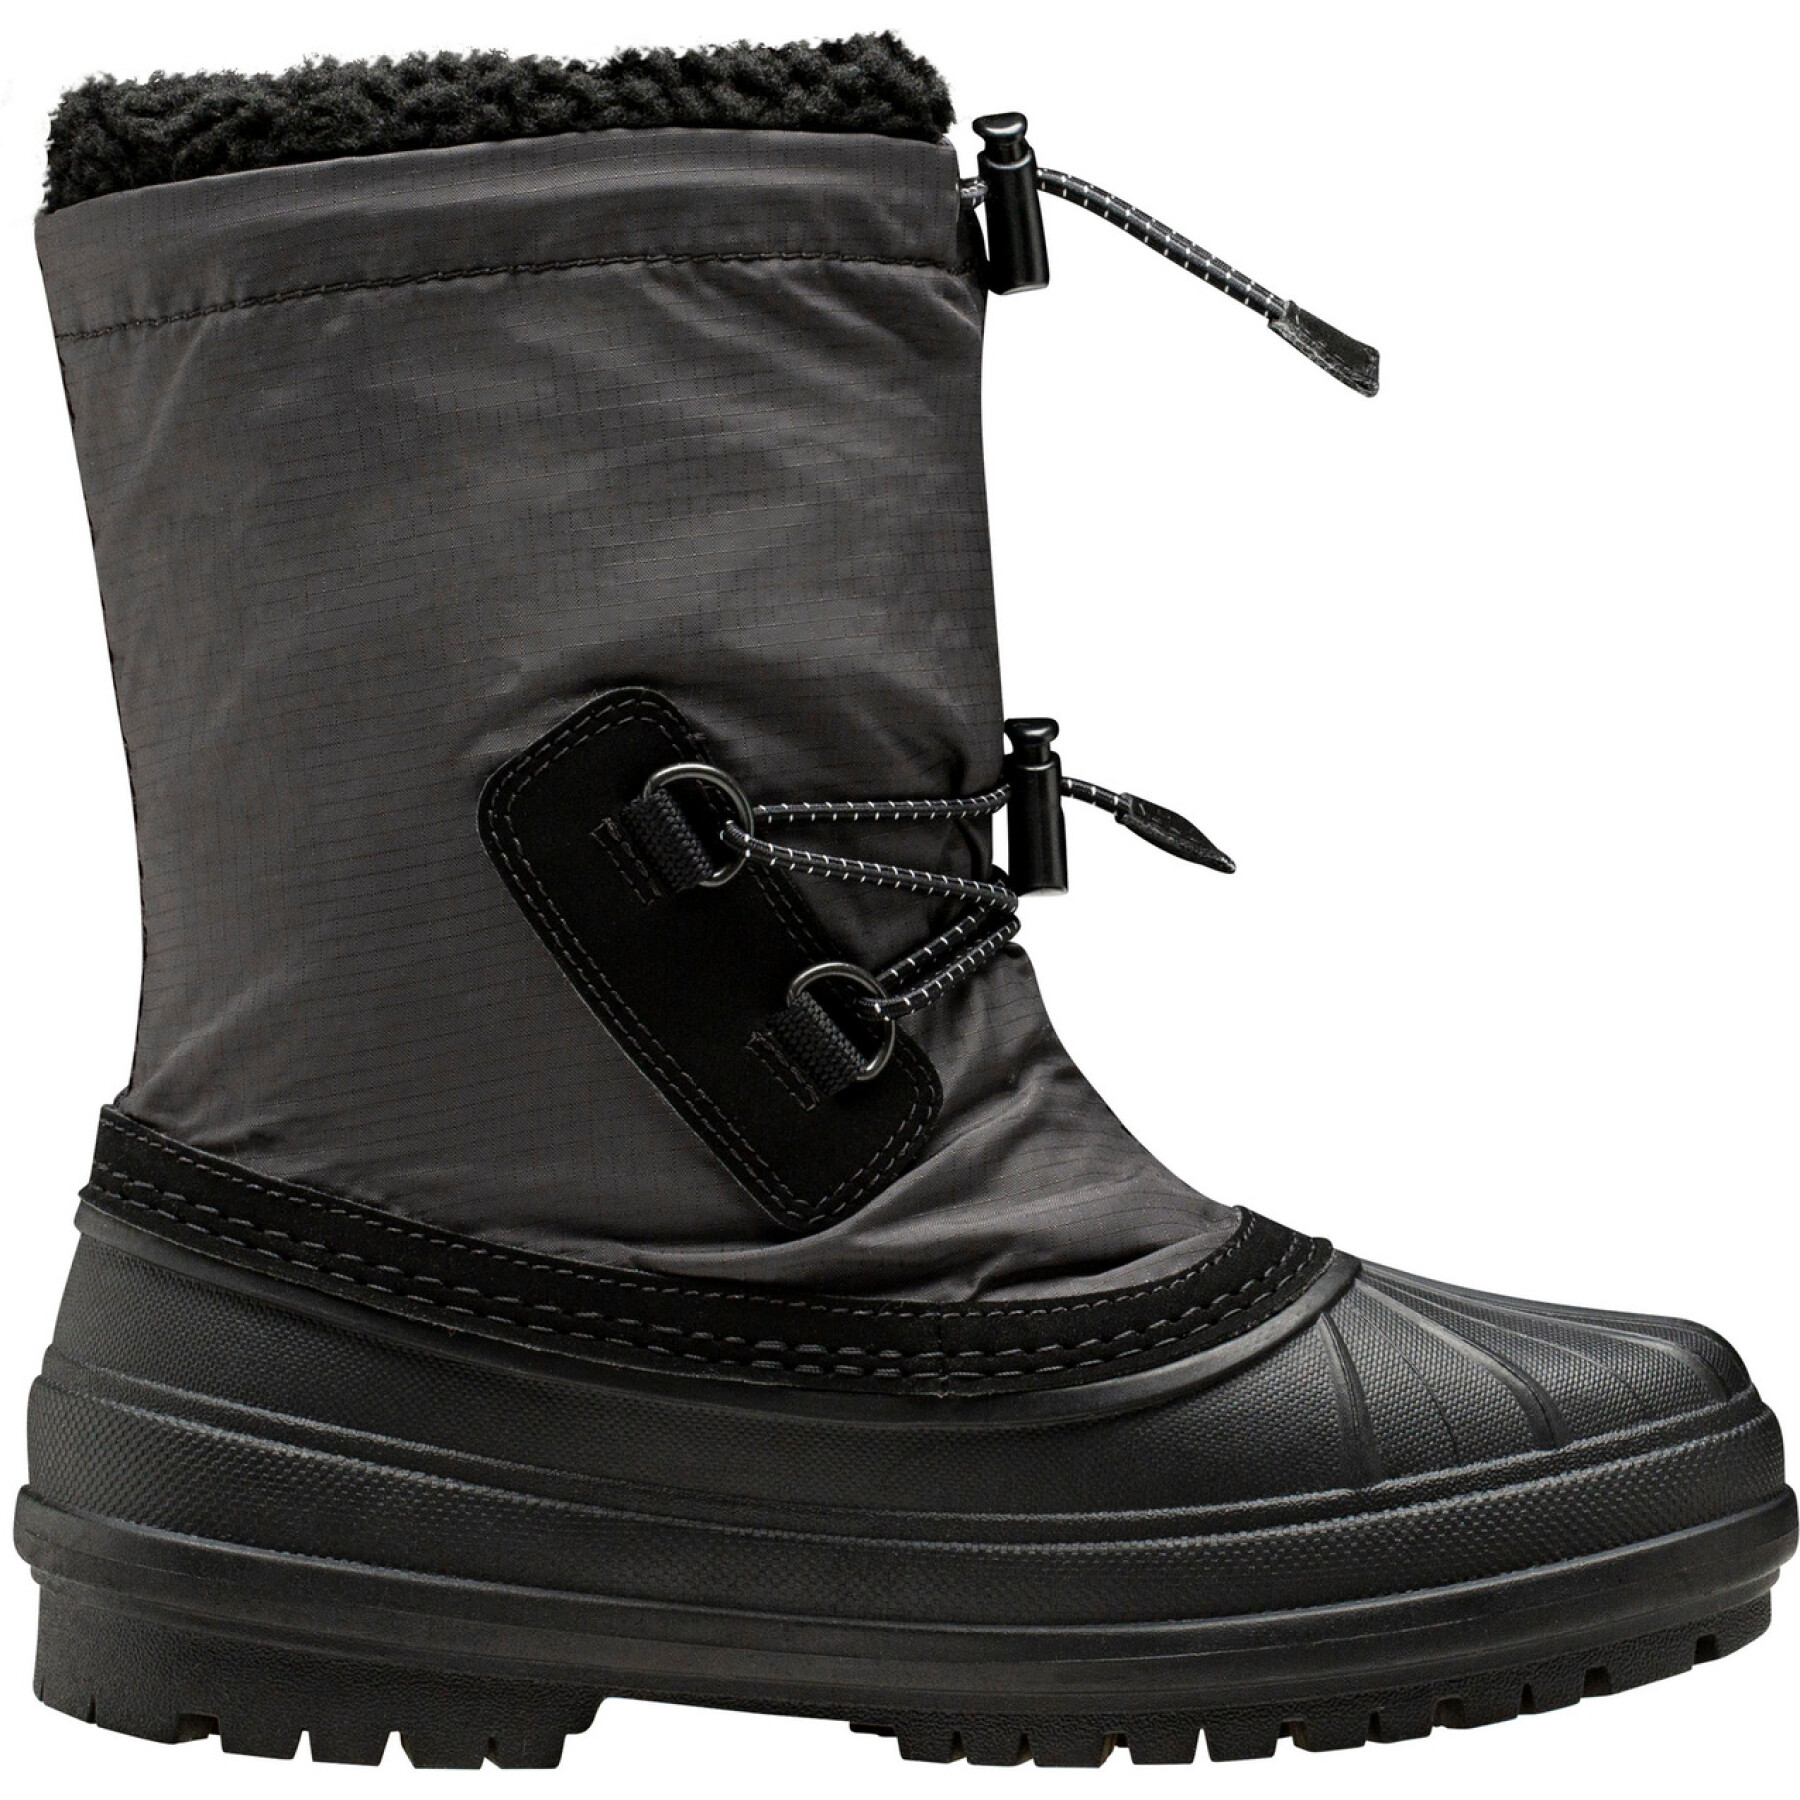 Children's winter boots Helly Hansen Varanger Insulated